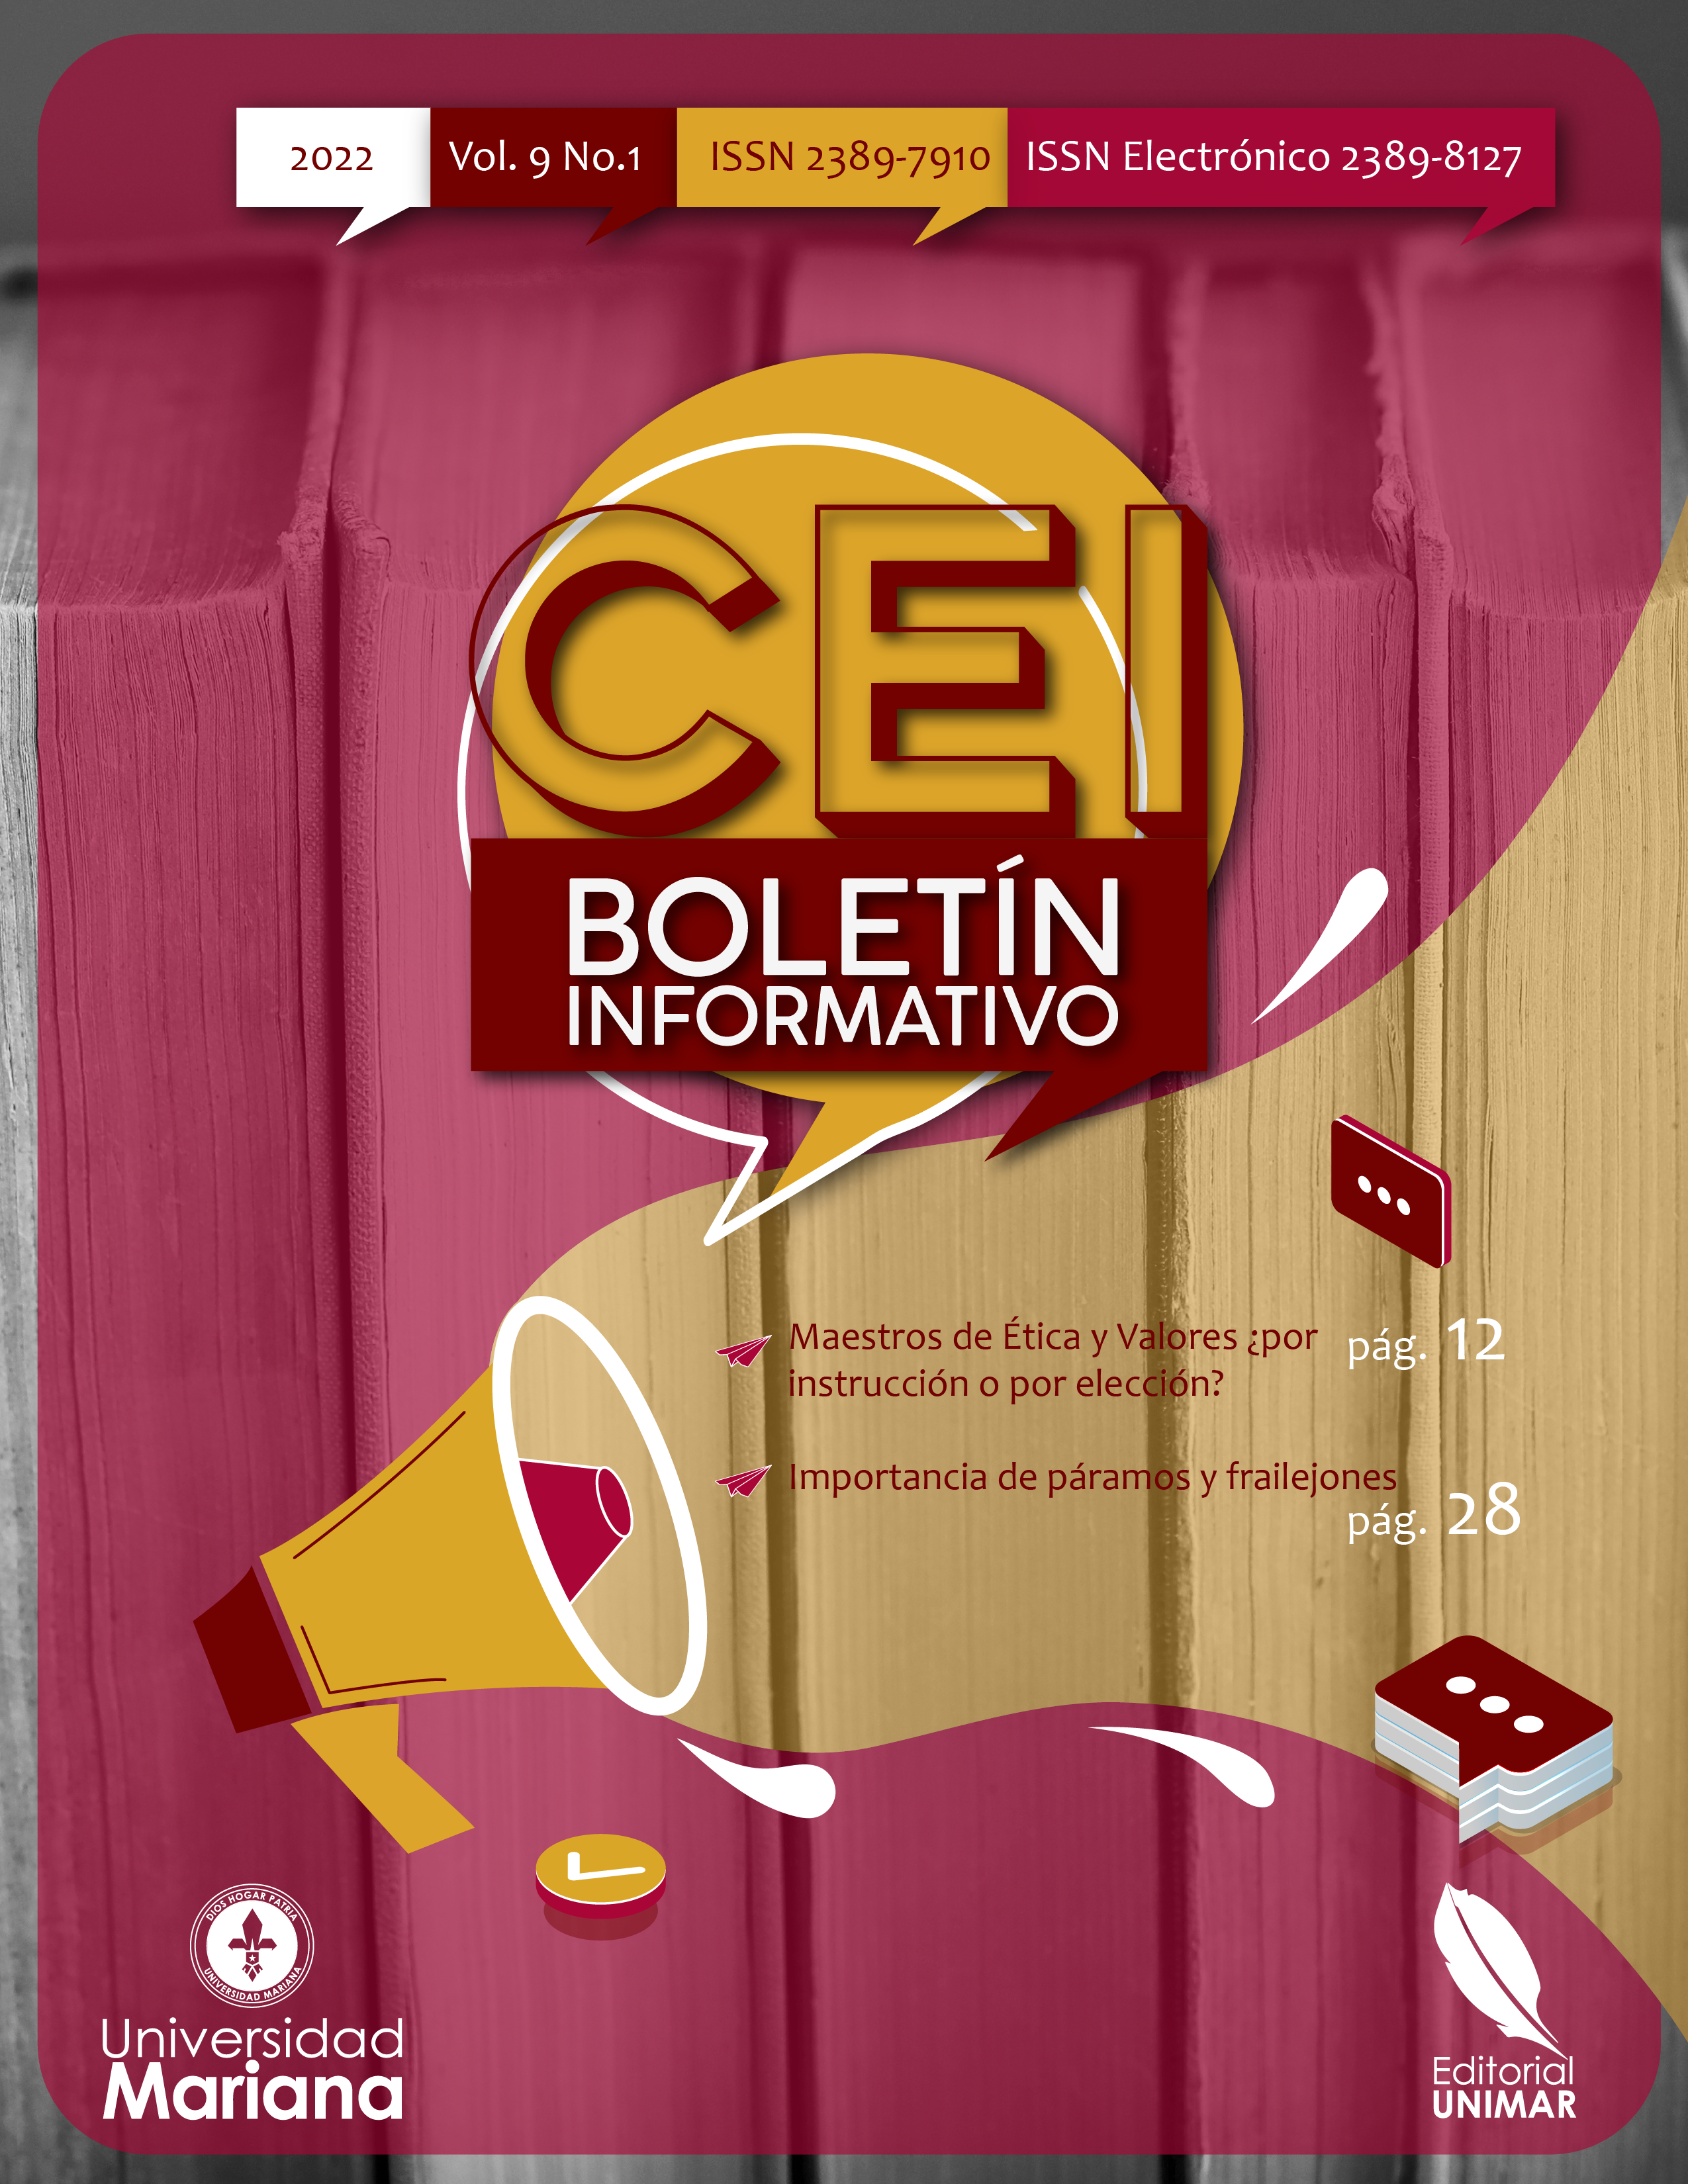 					Ver Vol. 9 Núm. 1 (2022): Boletín Informativo CEI Vol. 9 No.1
				